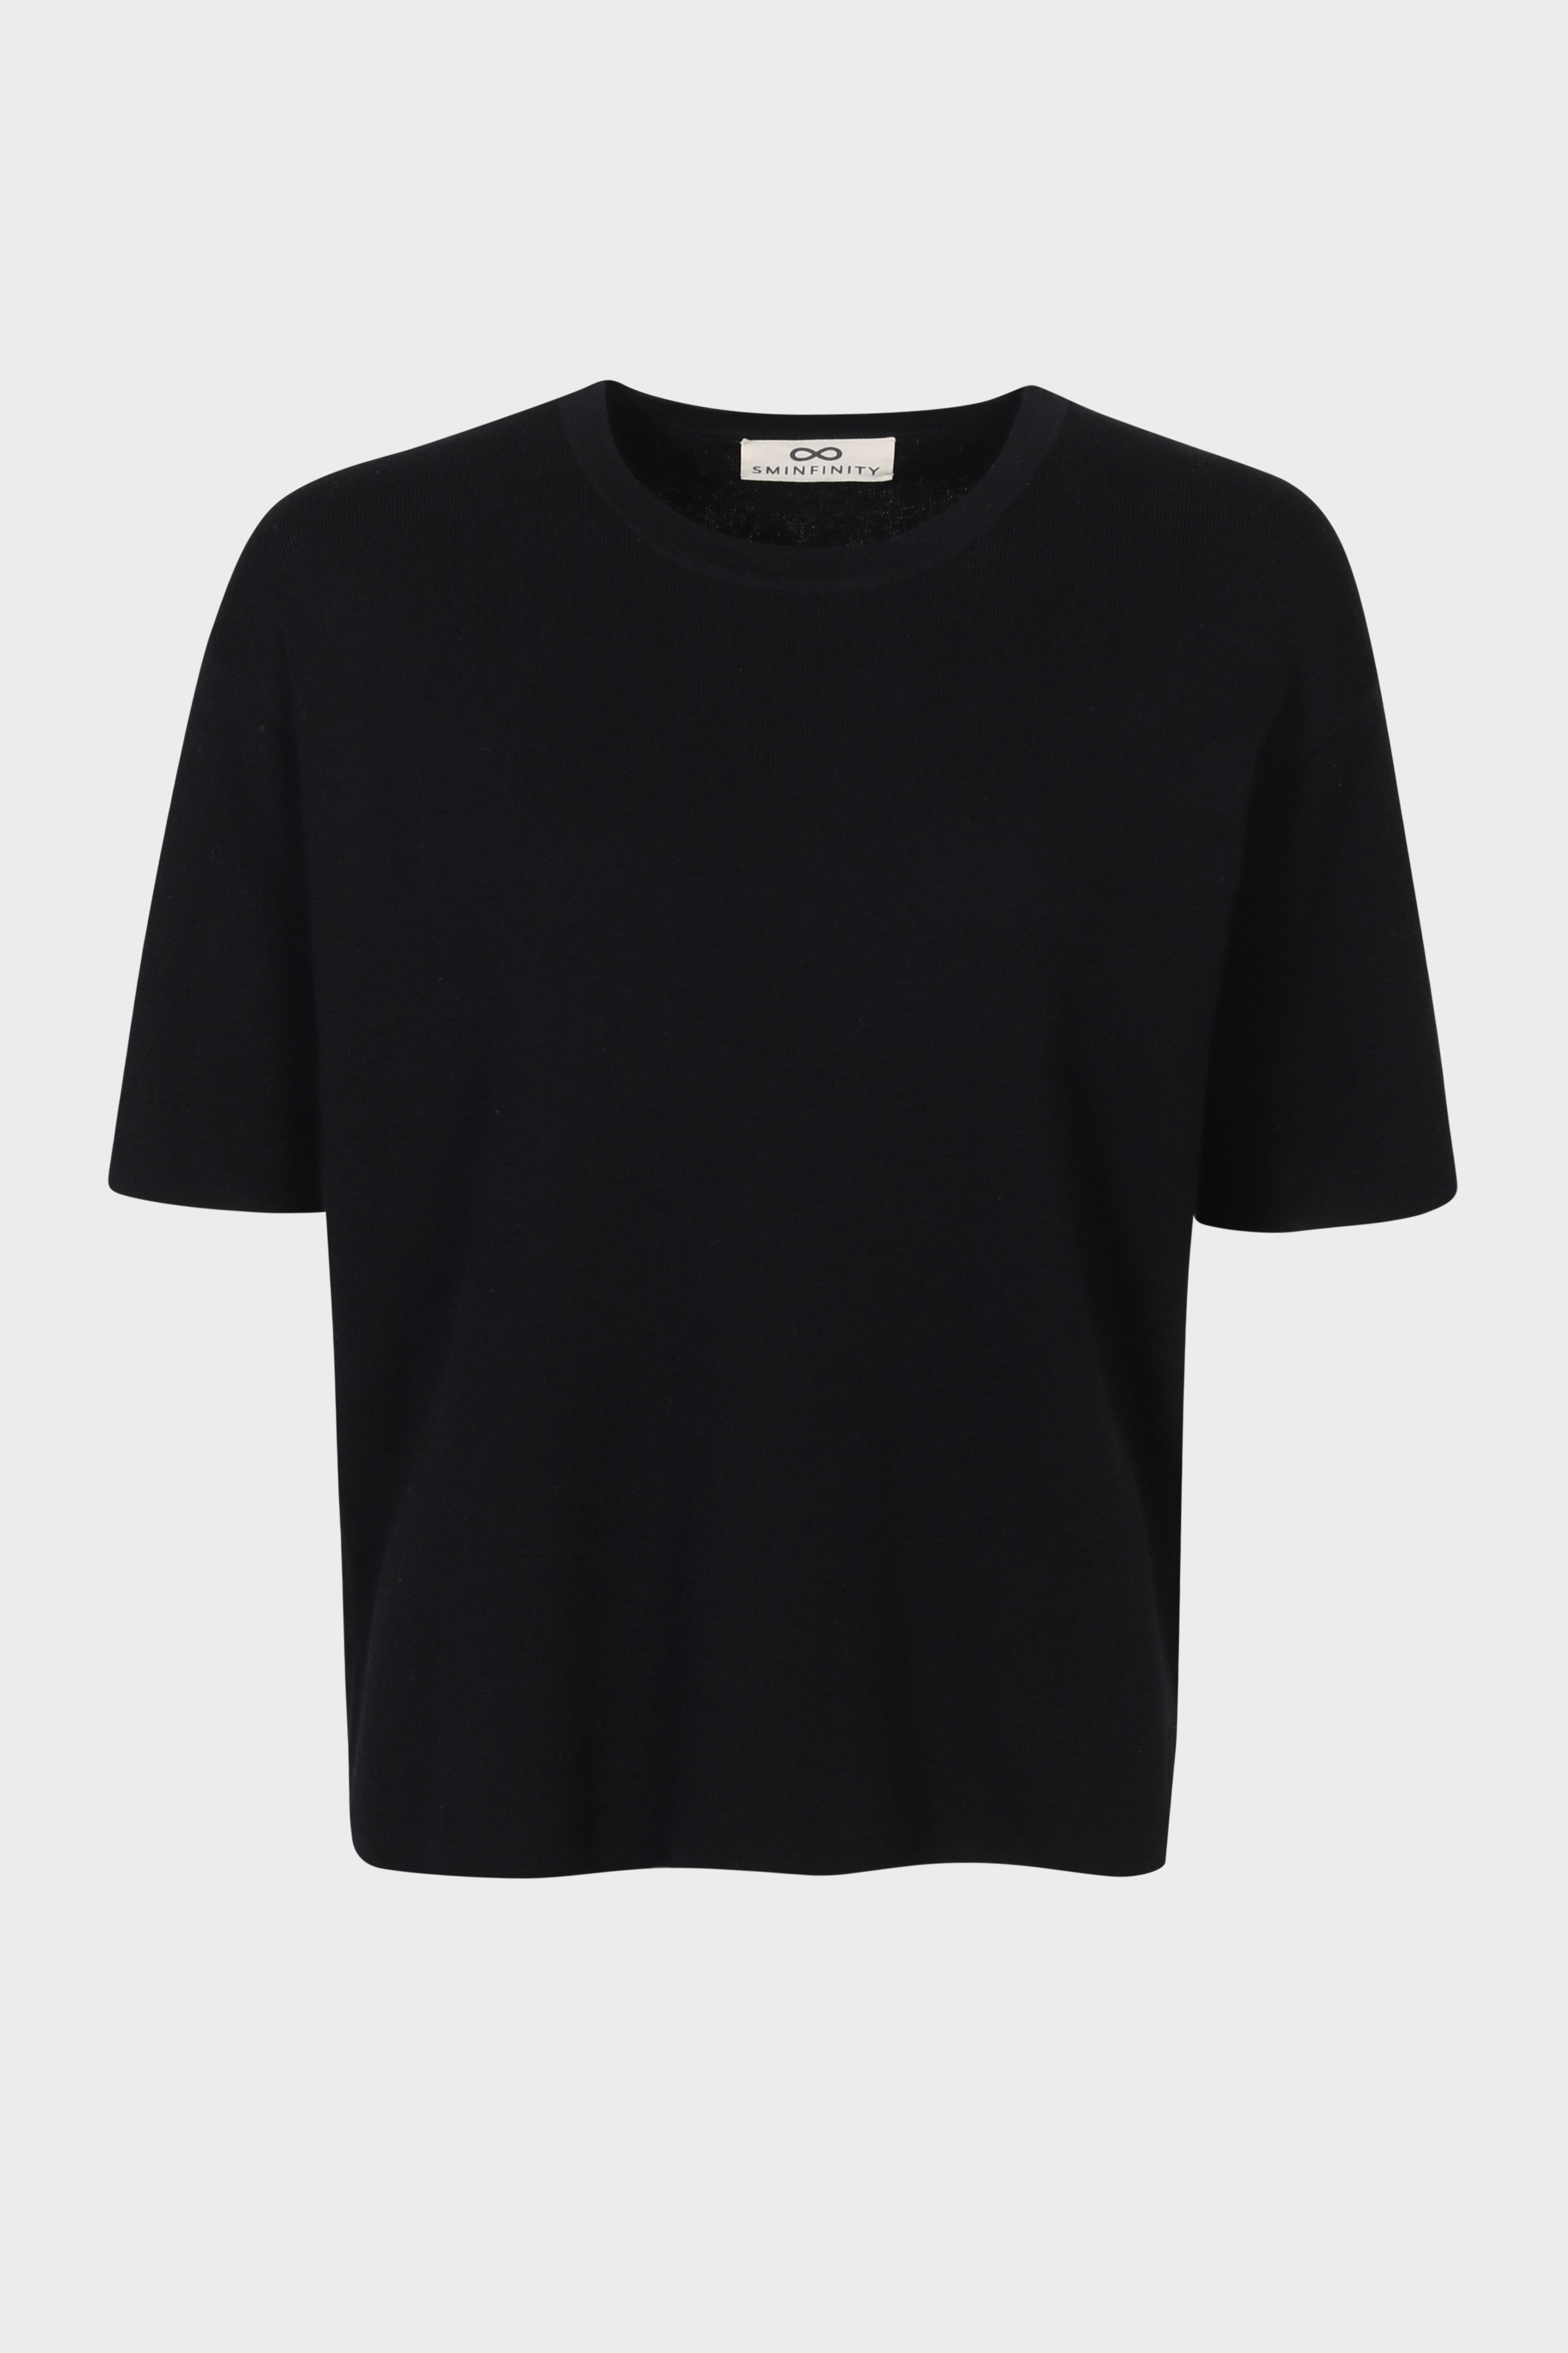 SMINFINITY Knit T-Shirt in Black XS/S